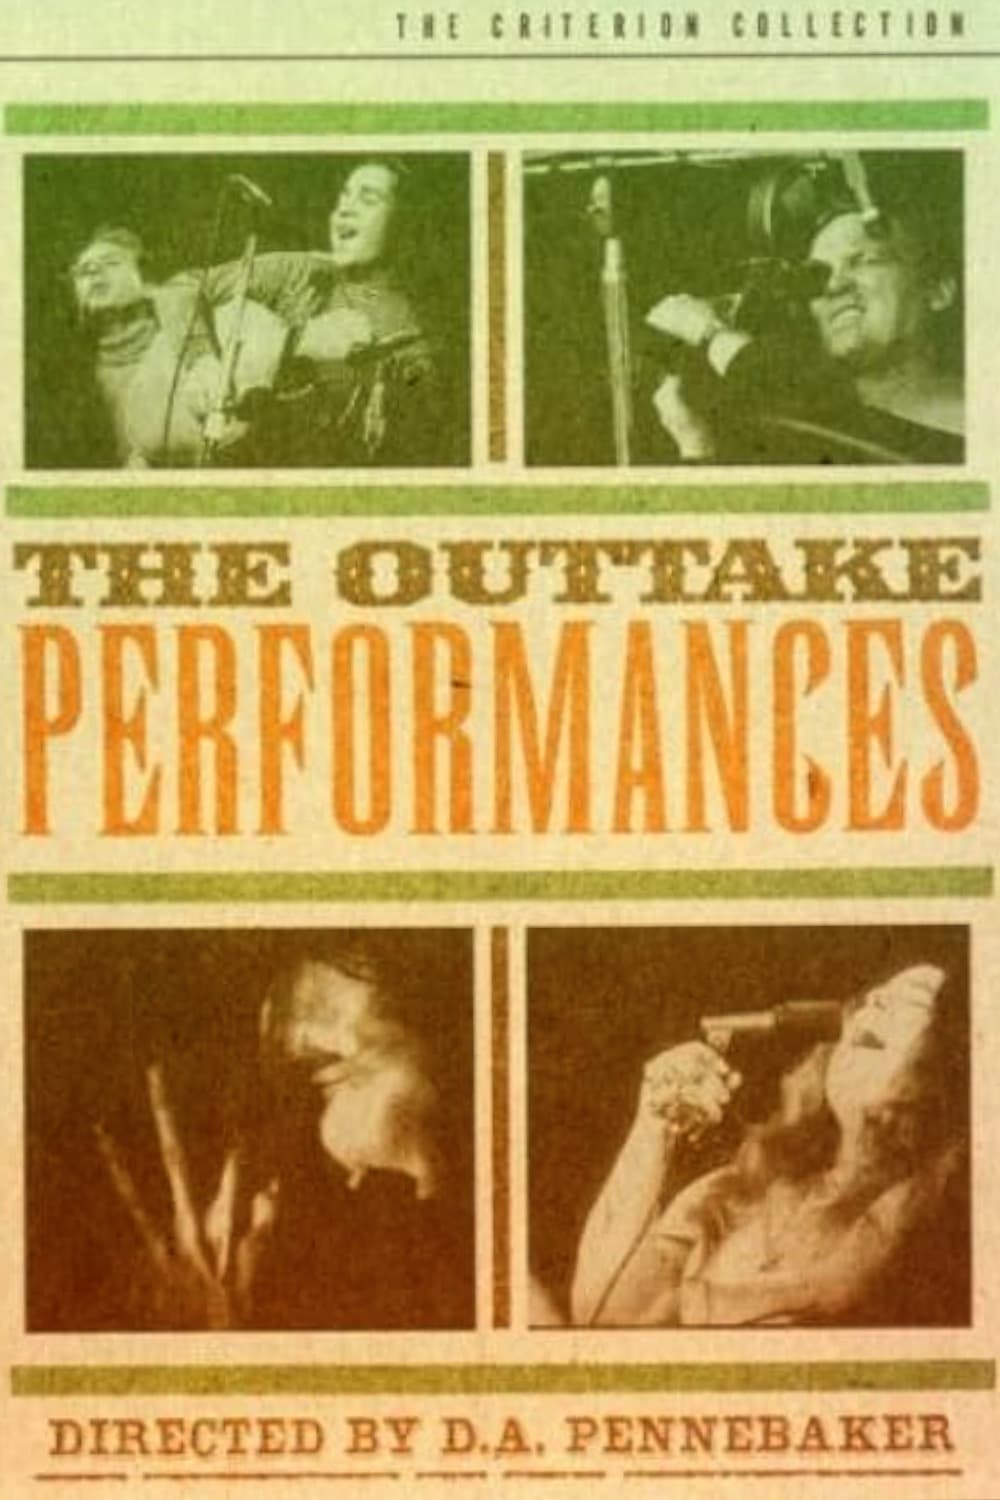 Monterey Pop: The Outtake Performances